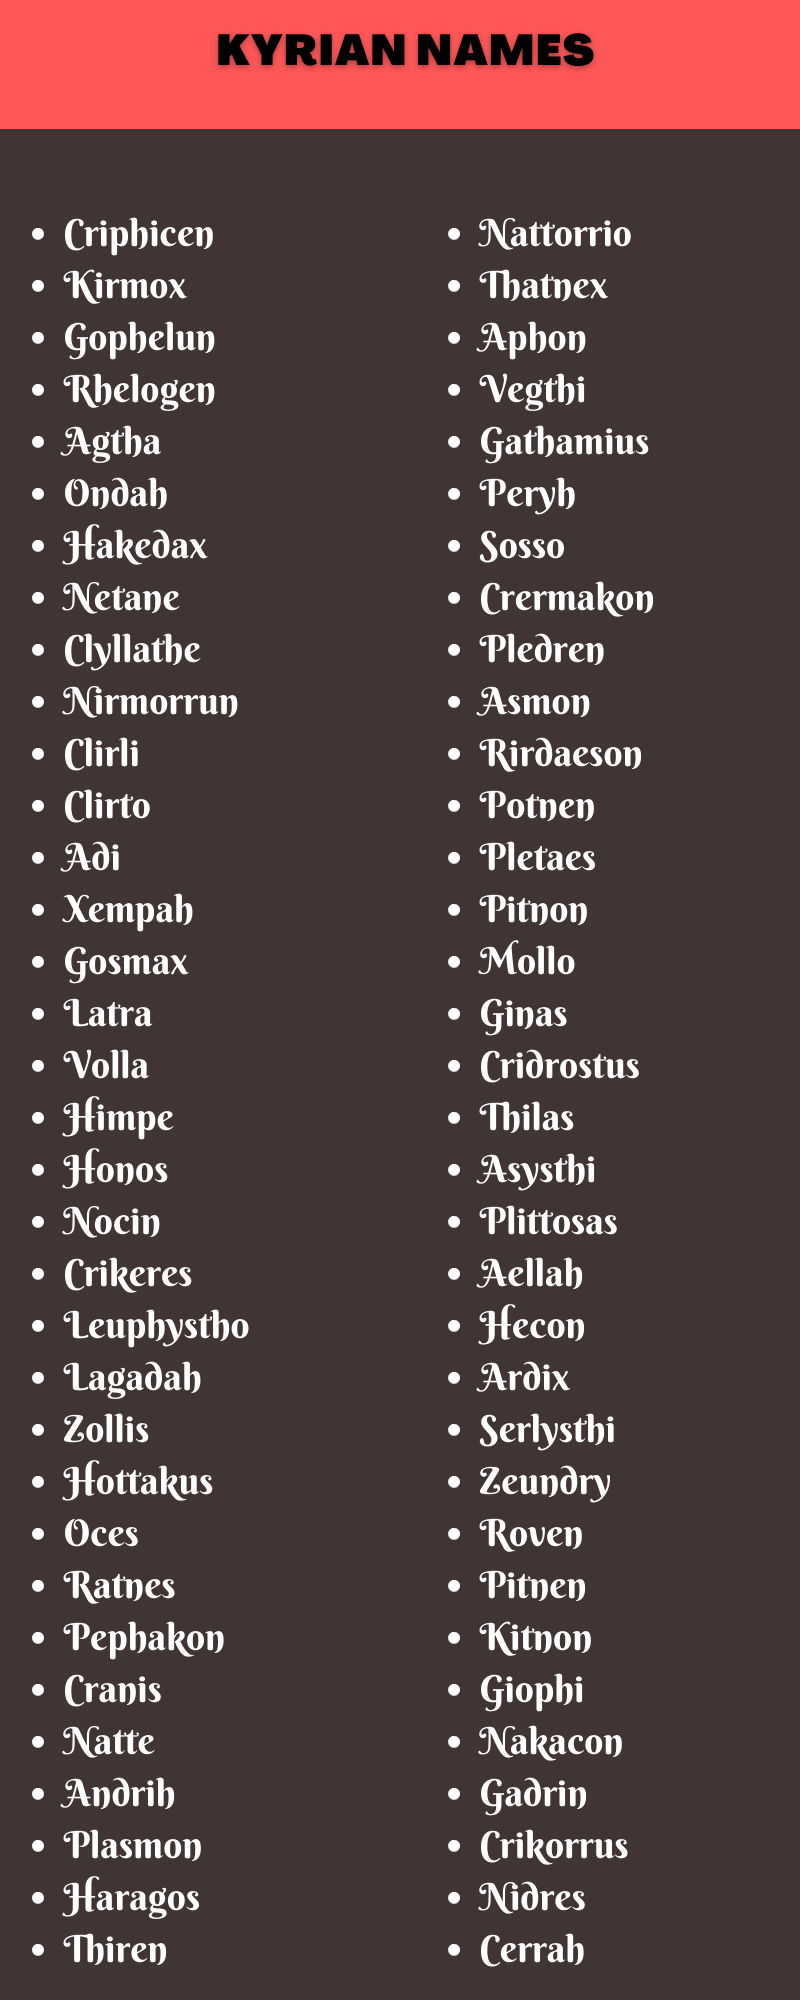 Kyrian Names